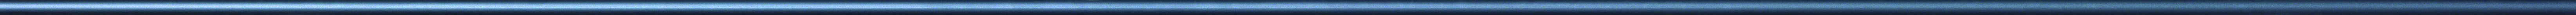 Fap Lumina Blu Micromatita 0,7x91,5 RT